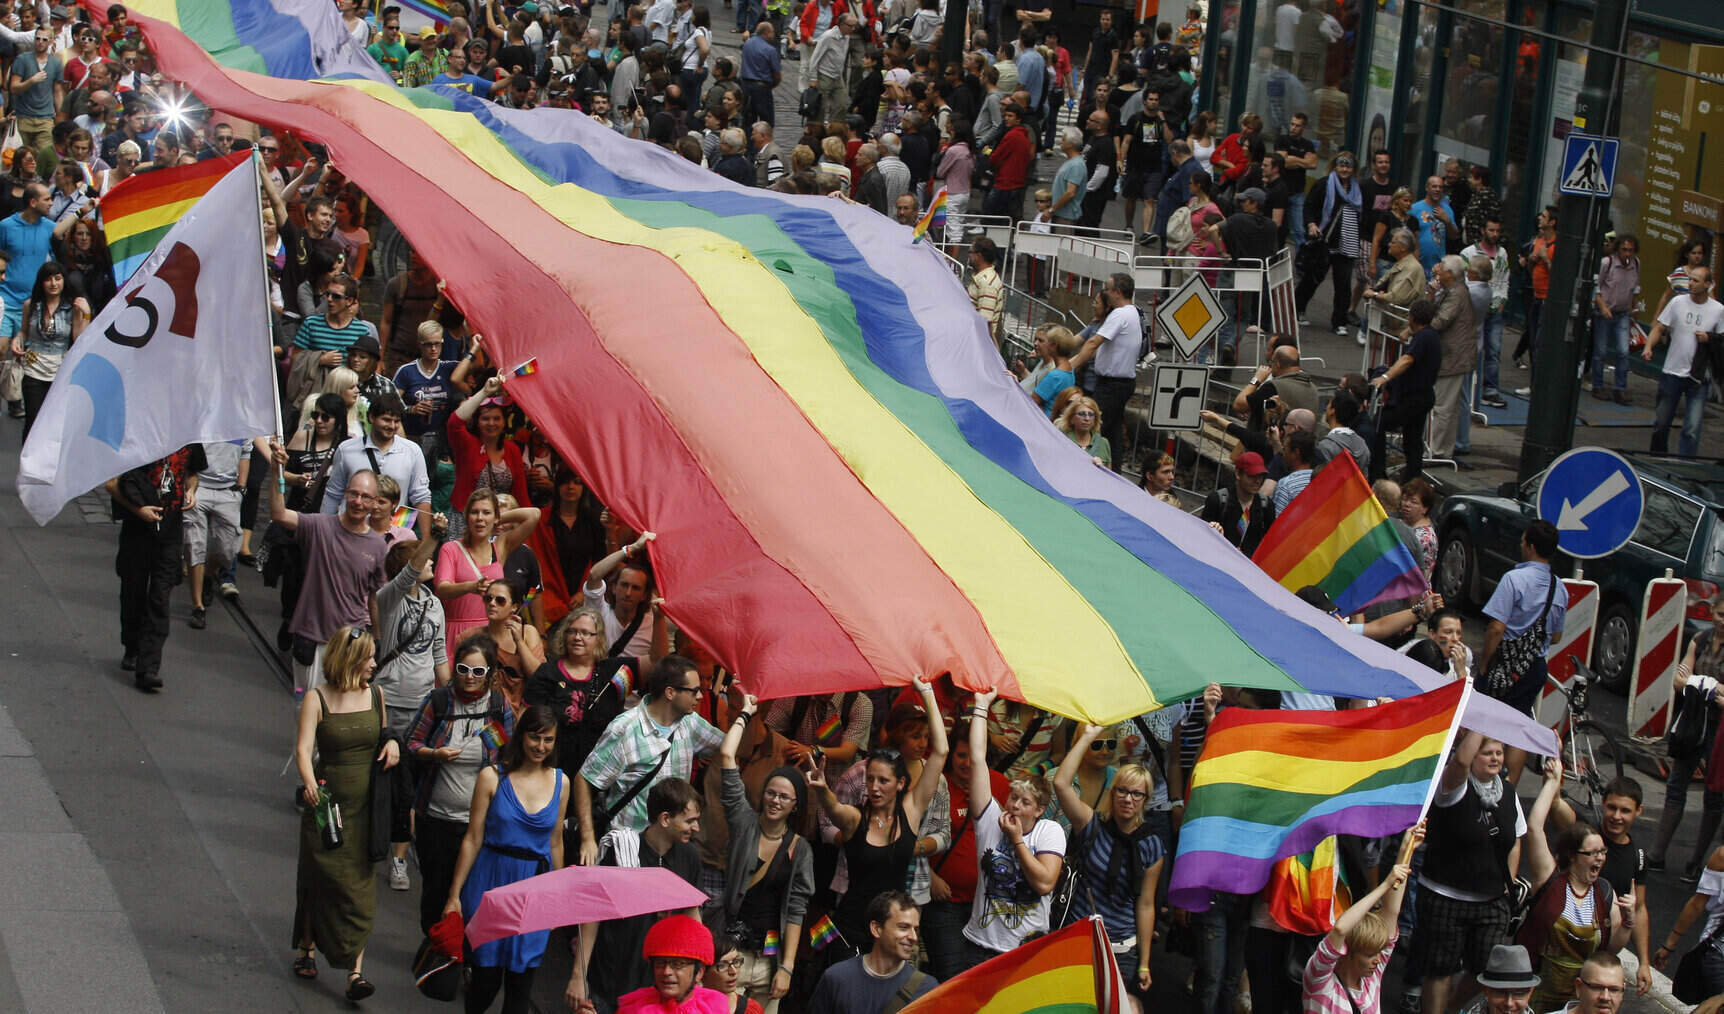 Prague Pride, LGBT